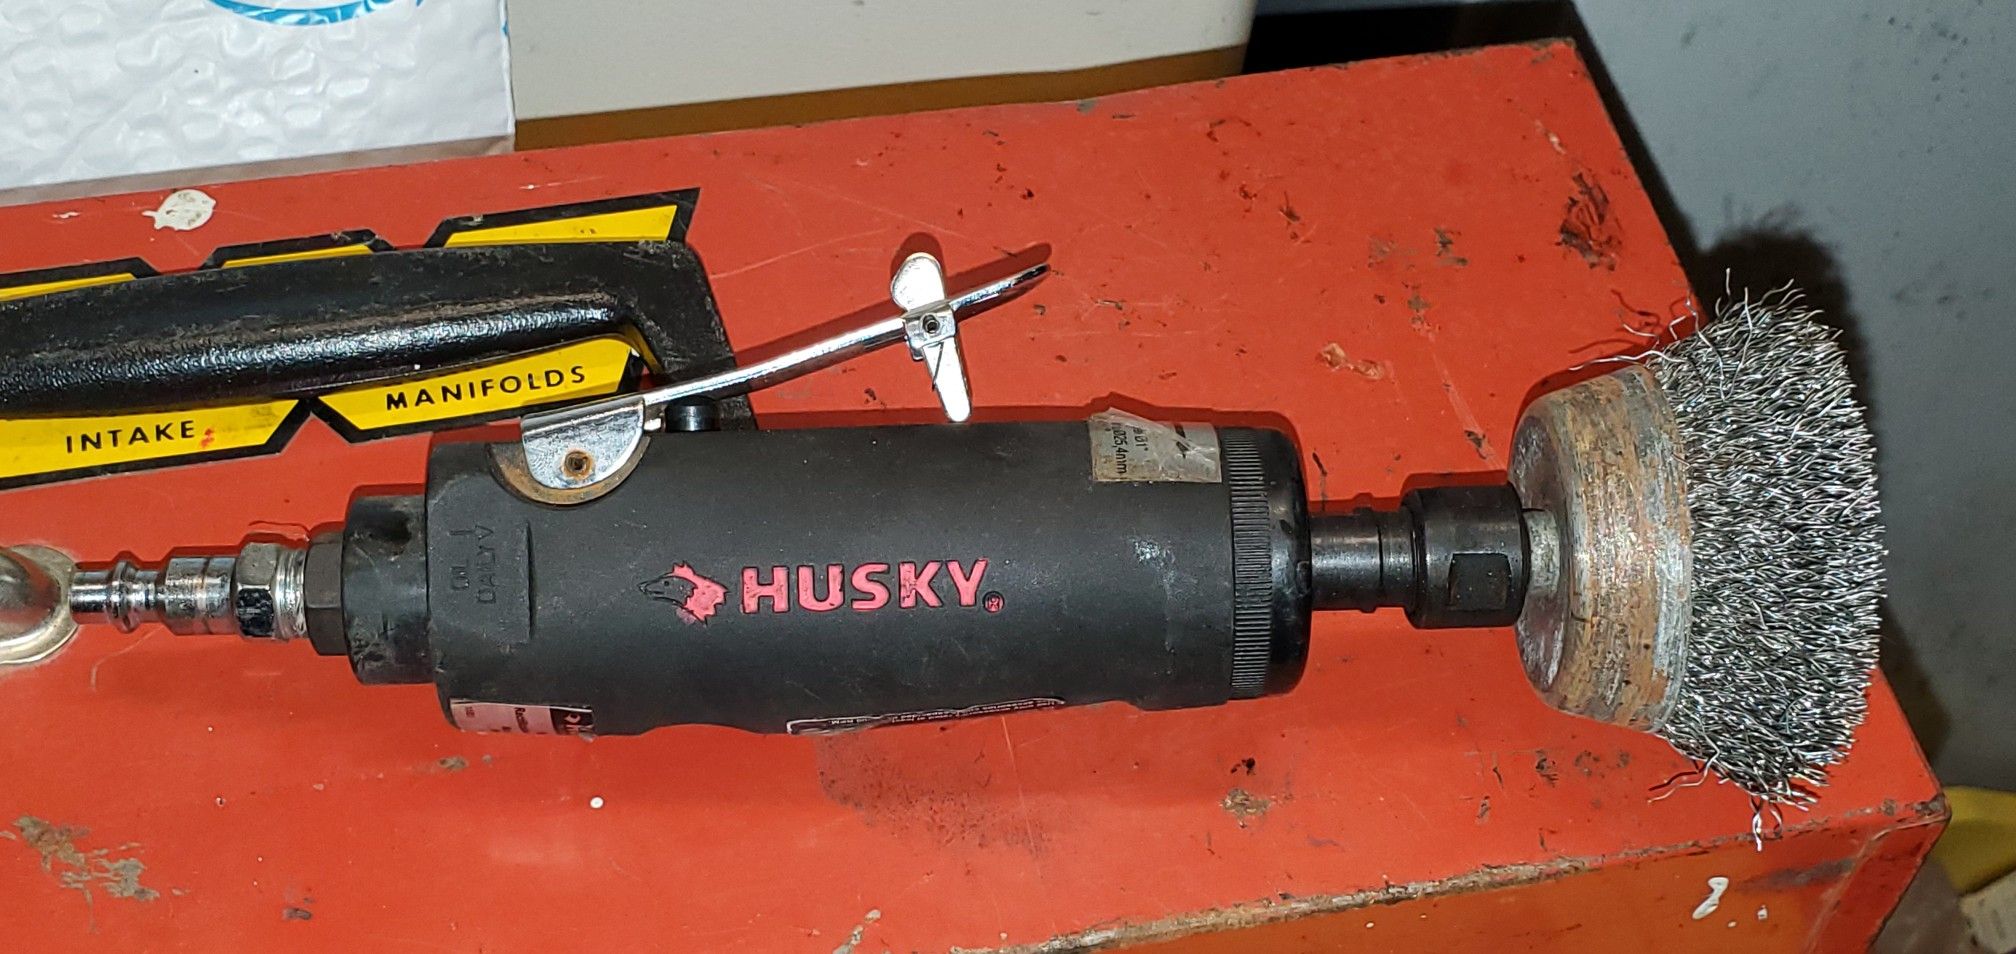 Husky air gun